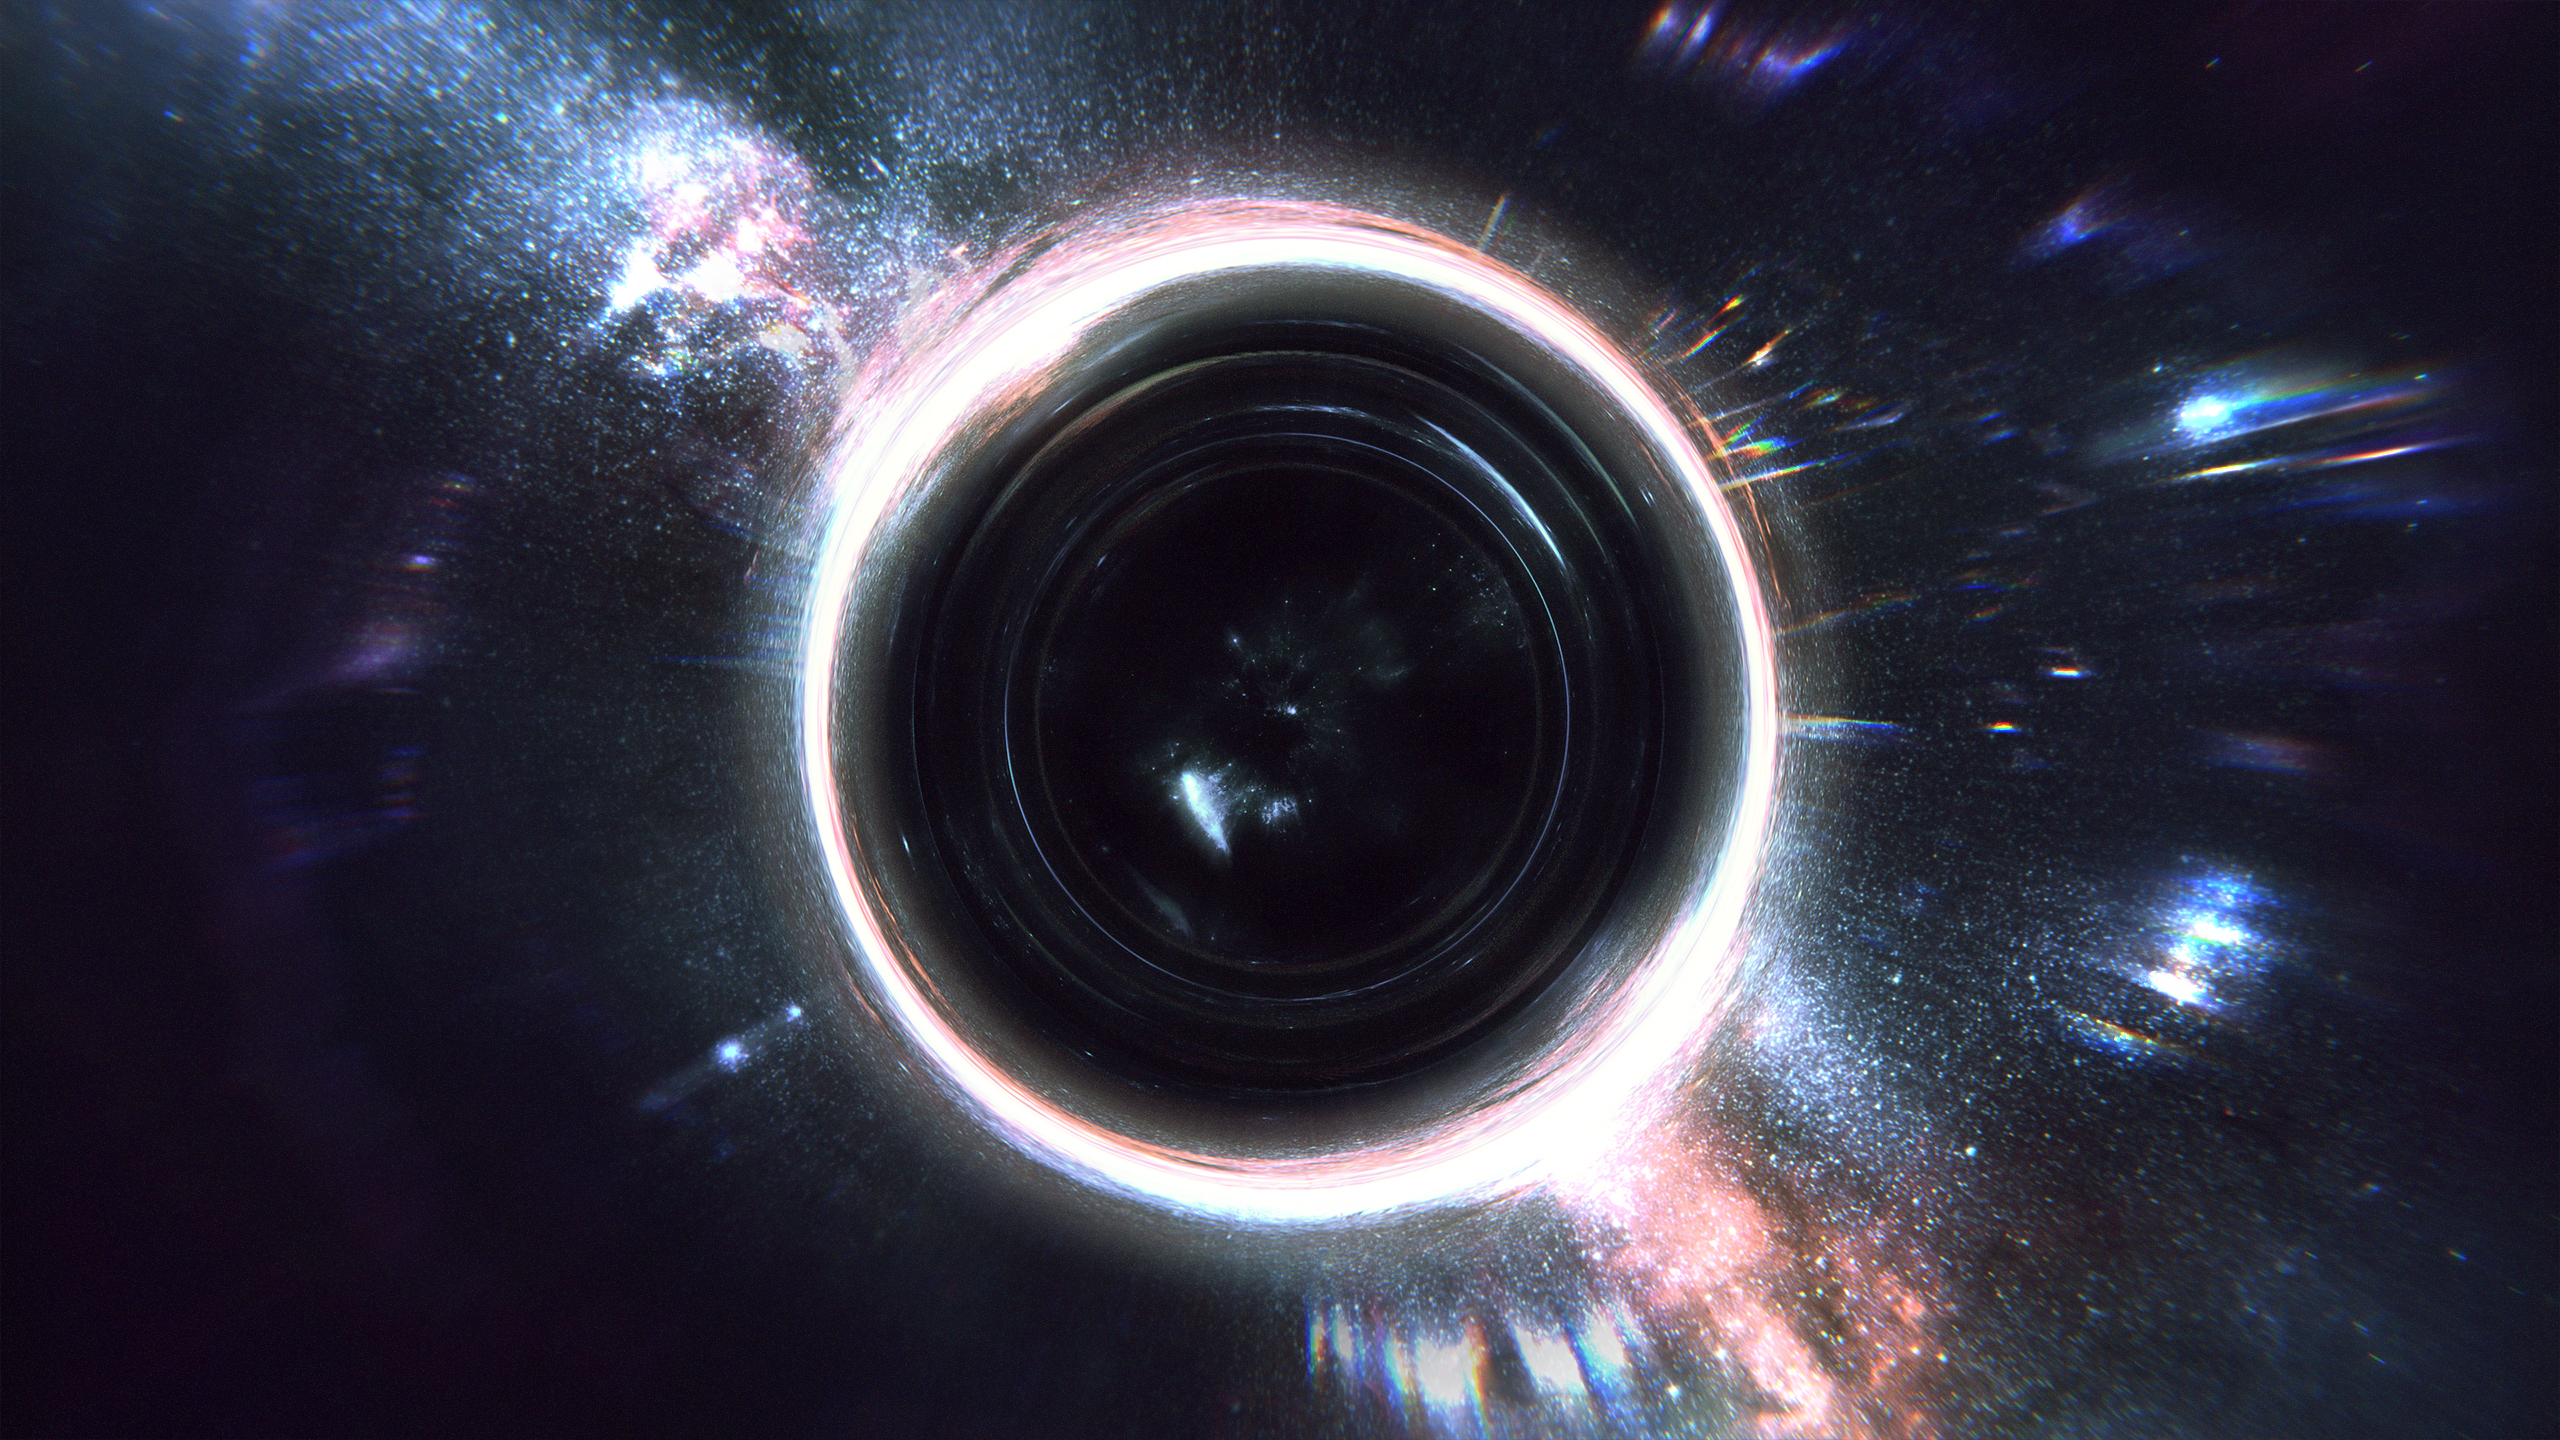 Space Science Fiction Black Holes Warp Stars Lights 2560x1440